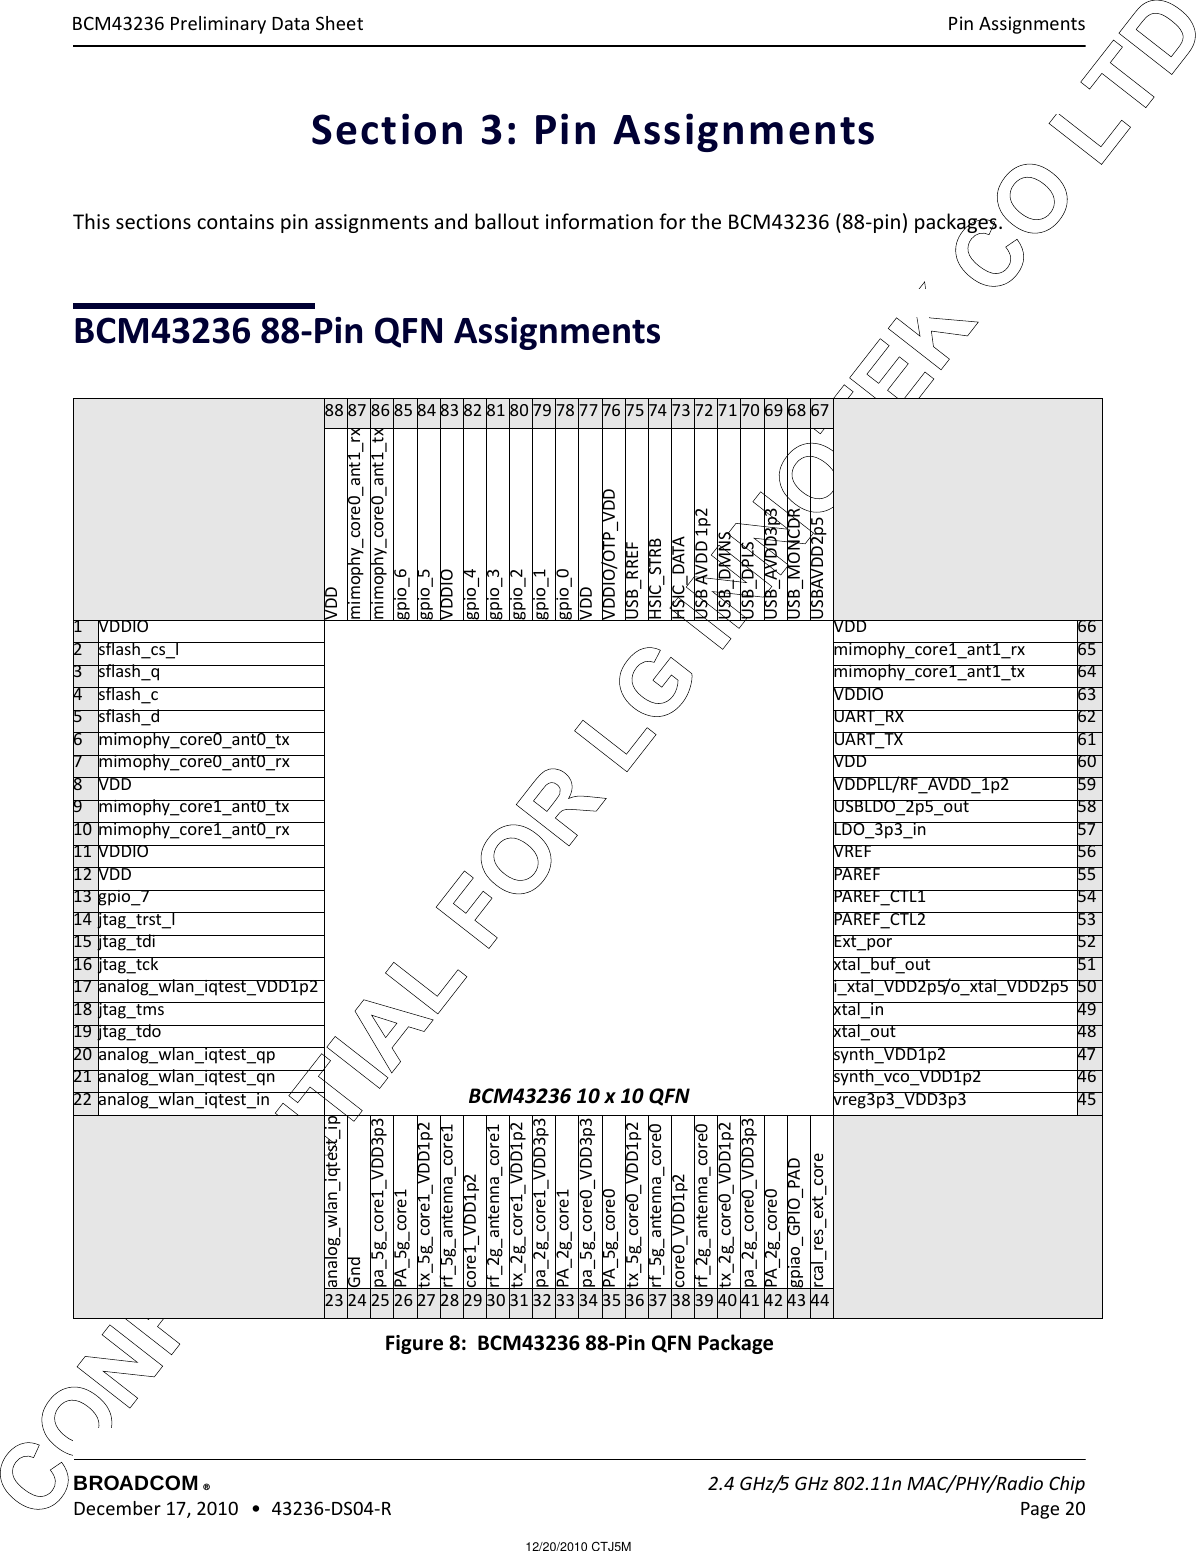 12/20/2010 CTJ5MCONFIDENTIAL FOR LG INNOTEK CO LTD Pin AssignmentsBROADCOM    2.4 GHz/5 GHz 802.11n MAC/PHY/Radio Chip December 17, 2010   •  43236-DS04-R Page 20®BCM43236 Preliminary Data SheetSection 3: Pin AssignmentsThis sections contains pin assignments and ballout information for the BCM43236 (88-pin) packages.BCM43236 88-Pin QFN AssignmentsFigure 8:  BCM43236 88-Pin QFN Package 88 87 86 85 84 83 82 81 80 79 78 77 76 75 74 73 72 71 70 69 68 67VDDmimophy_core0_ant1_rxmimophy_core0_ant1_txgpio_6gpio_5VDDIOgpio_4gpio_3gpio_2gpio_1gpio_0VDDVDDIO/OTP_VDDUSB_RREFHSIC_STRBHSIC_DATAUSB AVDD 1p2USB_DMNSUSB_DPLSUSB_AVDD3p3USB_MONCDRUSBAVDD2p51 VDDIOBCM43236 10 x 10 QFNVDD 662sflash_cs_l mimophy_core1_ant1_rx 653sflash_q mimophy_core1_ant1_tx 644sflash_c VDDIO 635sflash_d UART_RX 626 mimophy_core0_ant0_tx UART_TX 617 mimophy_core0_ant0_rx VDD 608VDD VDDPLL/RF_AVDD_1p2 599 mimophy_core1_ant0_tx USBLDO_2p5_out 5810 mimophy_core1_ant0_rx LDO_3p3_in 5711 VDDIO VREF 5612 VDD PAREF 5513 gpio_7 PAREF_CTL1 5414 jtag_trst_l PAREF_CTL2 5315 jtag_tdi Ext_por 5216 jtag_tck xtal_buf_out 5117 analog_wlan_iqtest_VDD1p2 i_xtal_VDD2p5/o_xtal_VDD2p5 5018 jtag_tms xtal_in 4919 jtag_tdo xtal_out 4820 analog_wlan_iqtest_qp synth_VDD1p2 4721 analog_wlan_iqtest_qn synth_vco_VDD1p2 4622 analog_wlan_iqtest_in vreg3p3_VDD3p3 45analog_wlan_iqtest_ipGndpa_5g_core1_VDD3p3PA_5g_core1tx_5g_core1_VDD1p2rf_5g_antenna_core1core1_VDD1p2rf_2g_antenna_core1tx_2g_core1_VDD1p2pa_2g_core1_VDD3p3PA_2g_core1pa_5g_core0_VDD3p3PA_5g_core0tx_5g_core0_VDD1p2rf_5g_antenna_core0core0_VDD1p2rf_2g_antenna_core0tx_2g_core0_VDD1p2pa_2g_core0_VDD3p3PA_2g_core0gpiao_GPIO_PADrcal_res_ext_core23 24 25 26 27 28 29 30 31 32 33 34 35 36 37 38 39 40 41 42 43 44